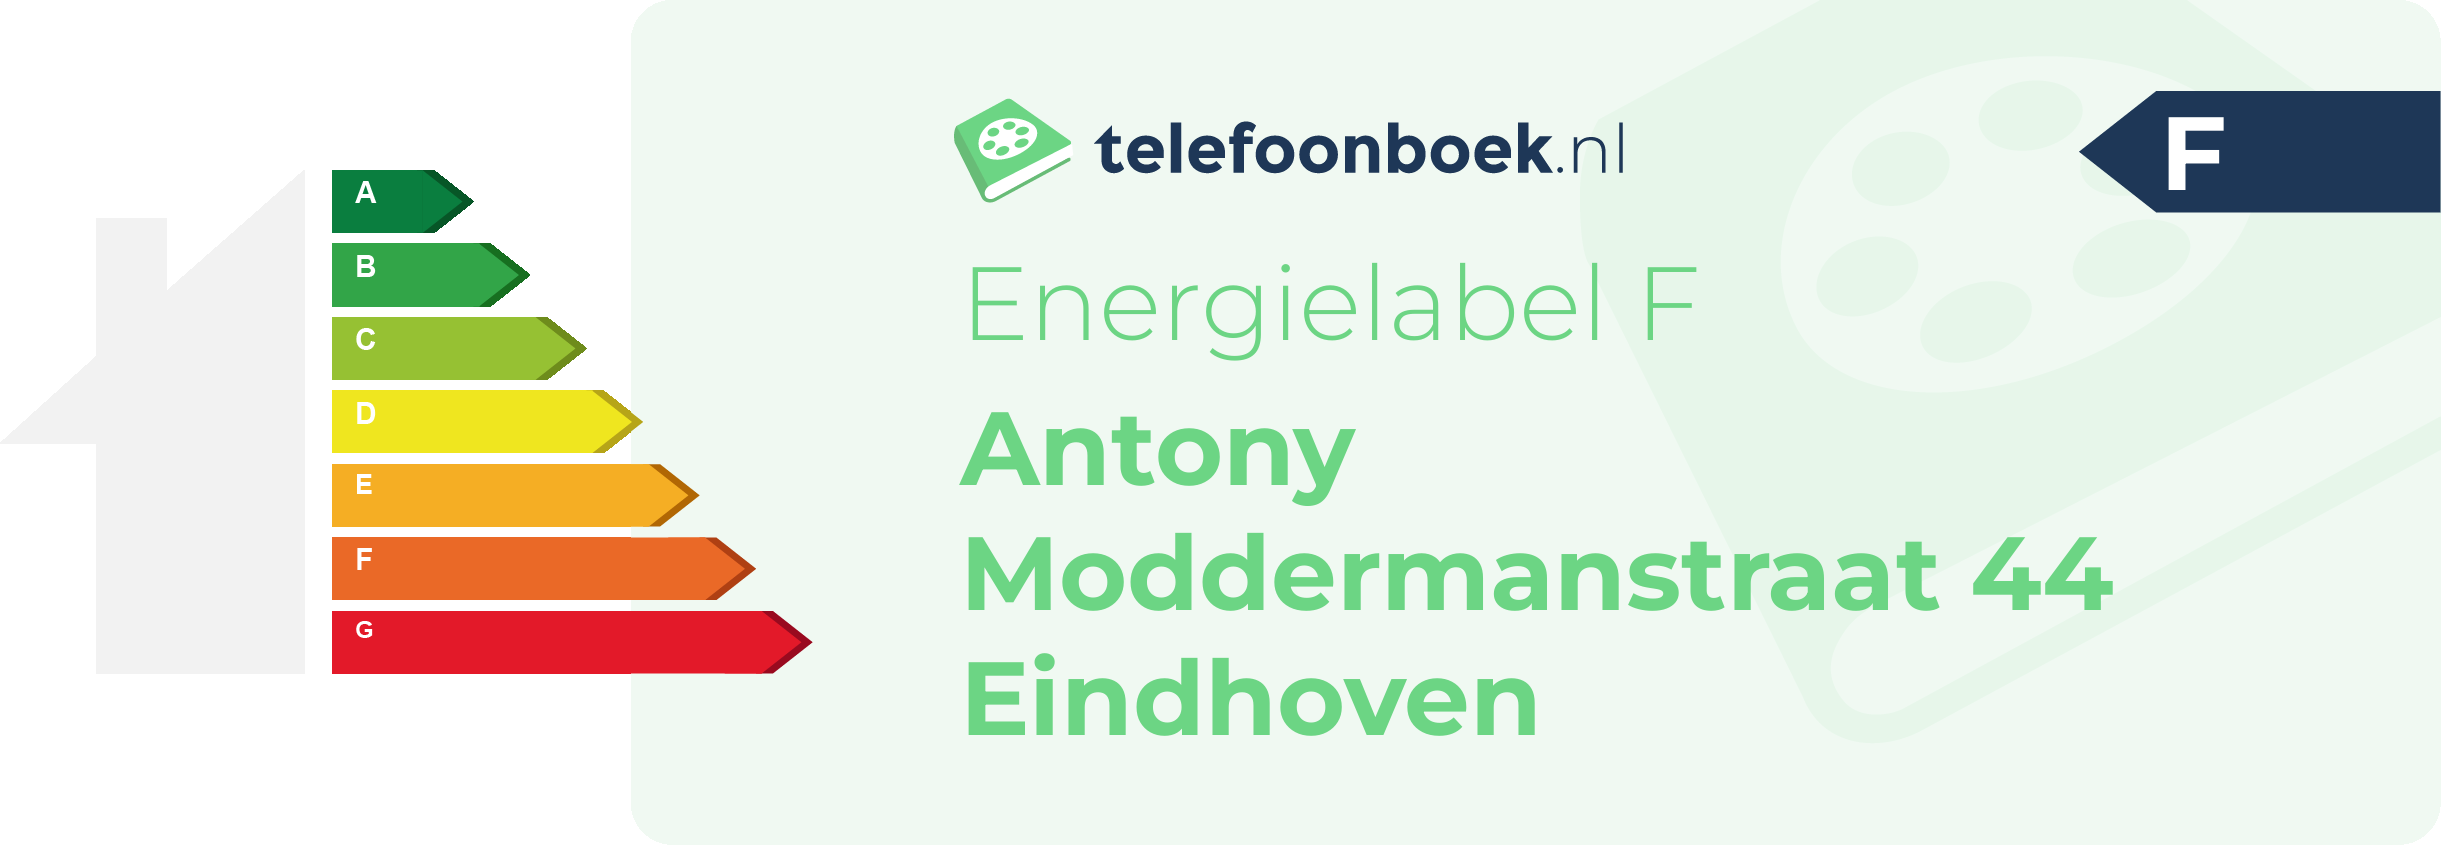 Energielabel Antony Moddermanstraat 44 Eindhoven